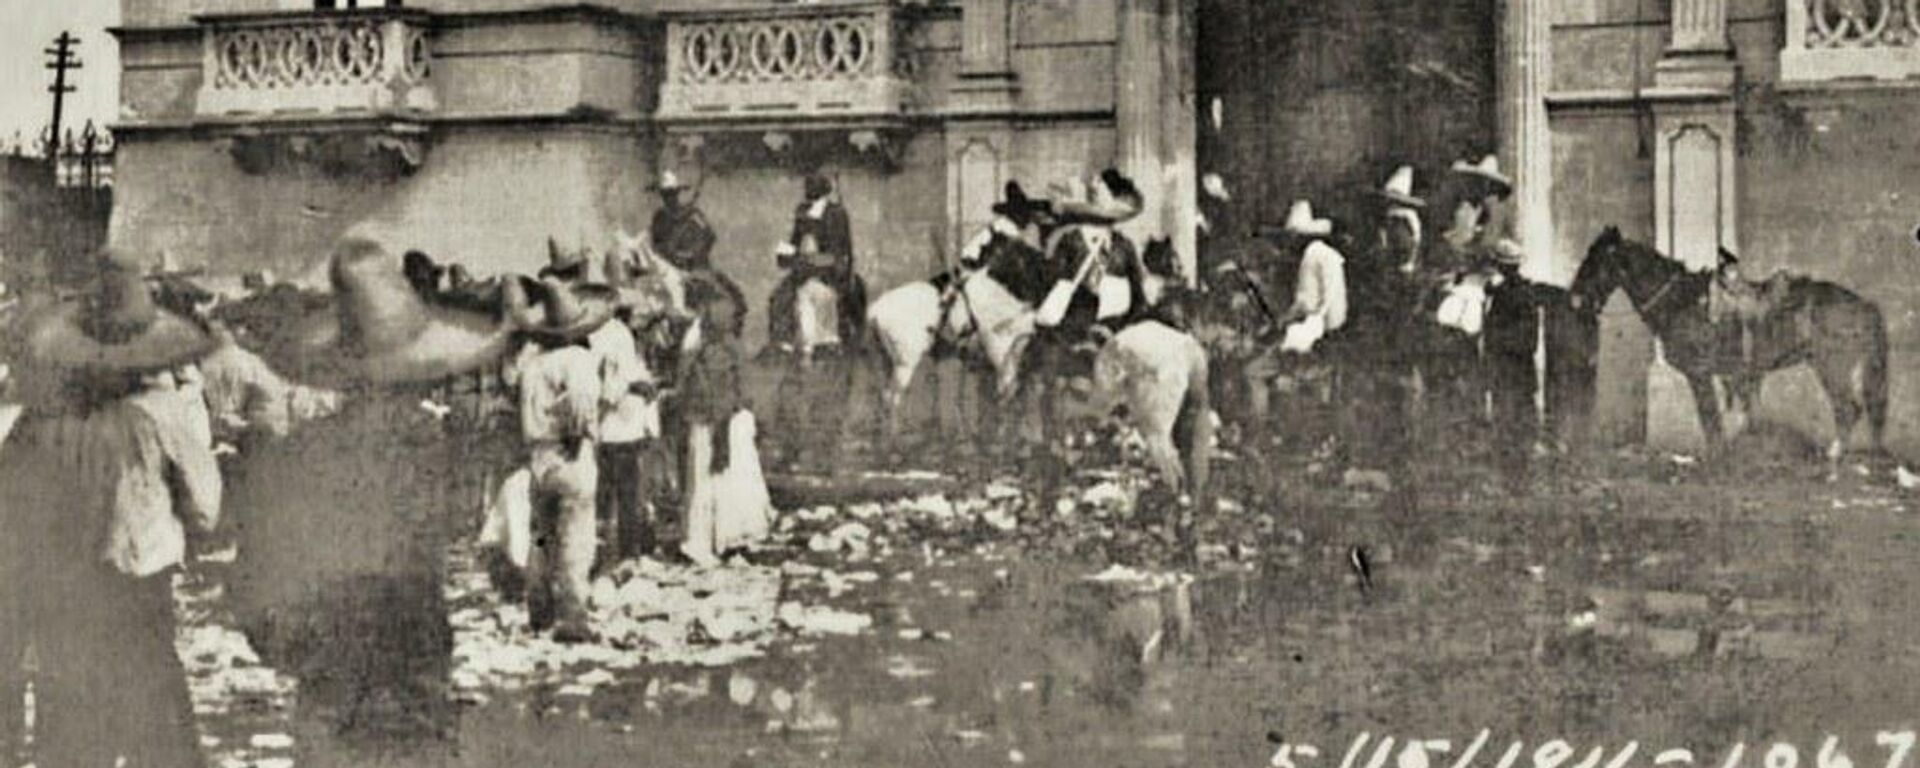 Maderistas entrando al casino de La Laguna el 15 de mayo de 1911 - Sputnik Mundo, 1920, 15.10.2021